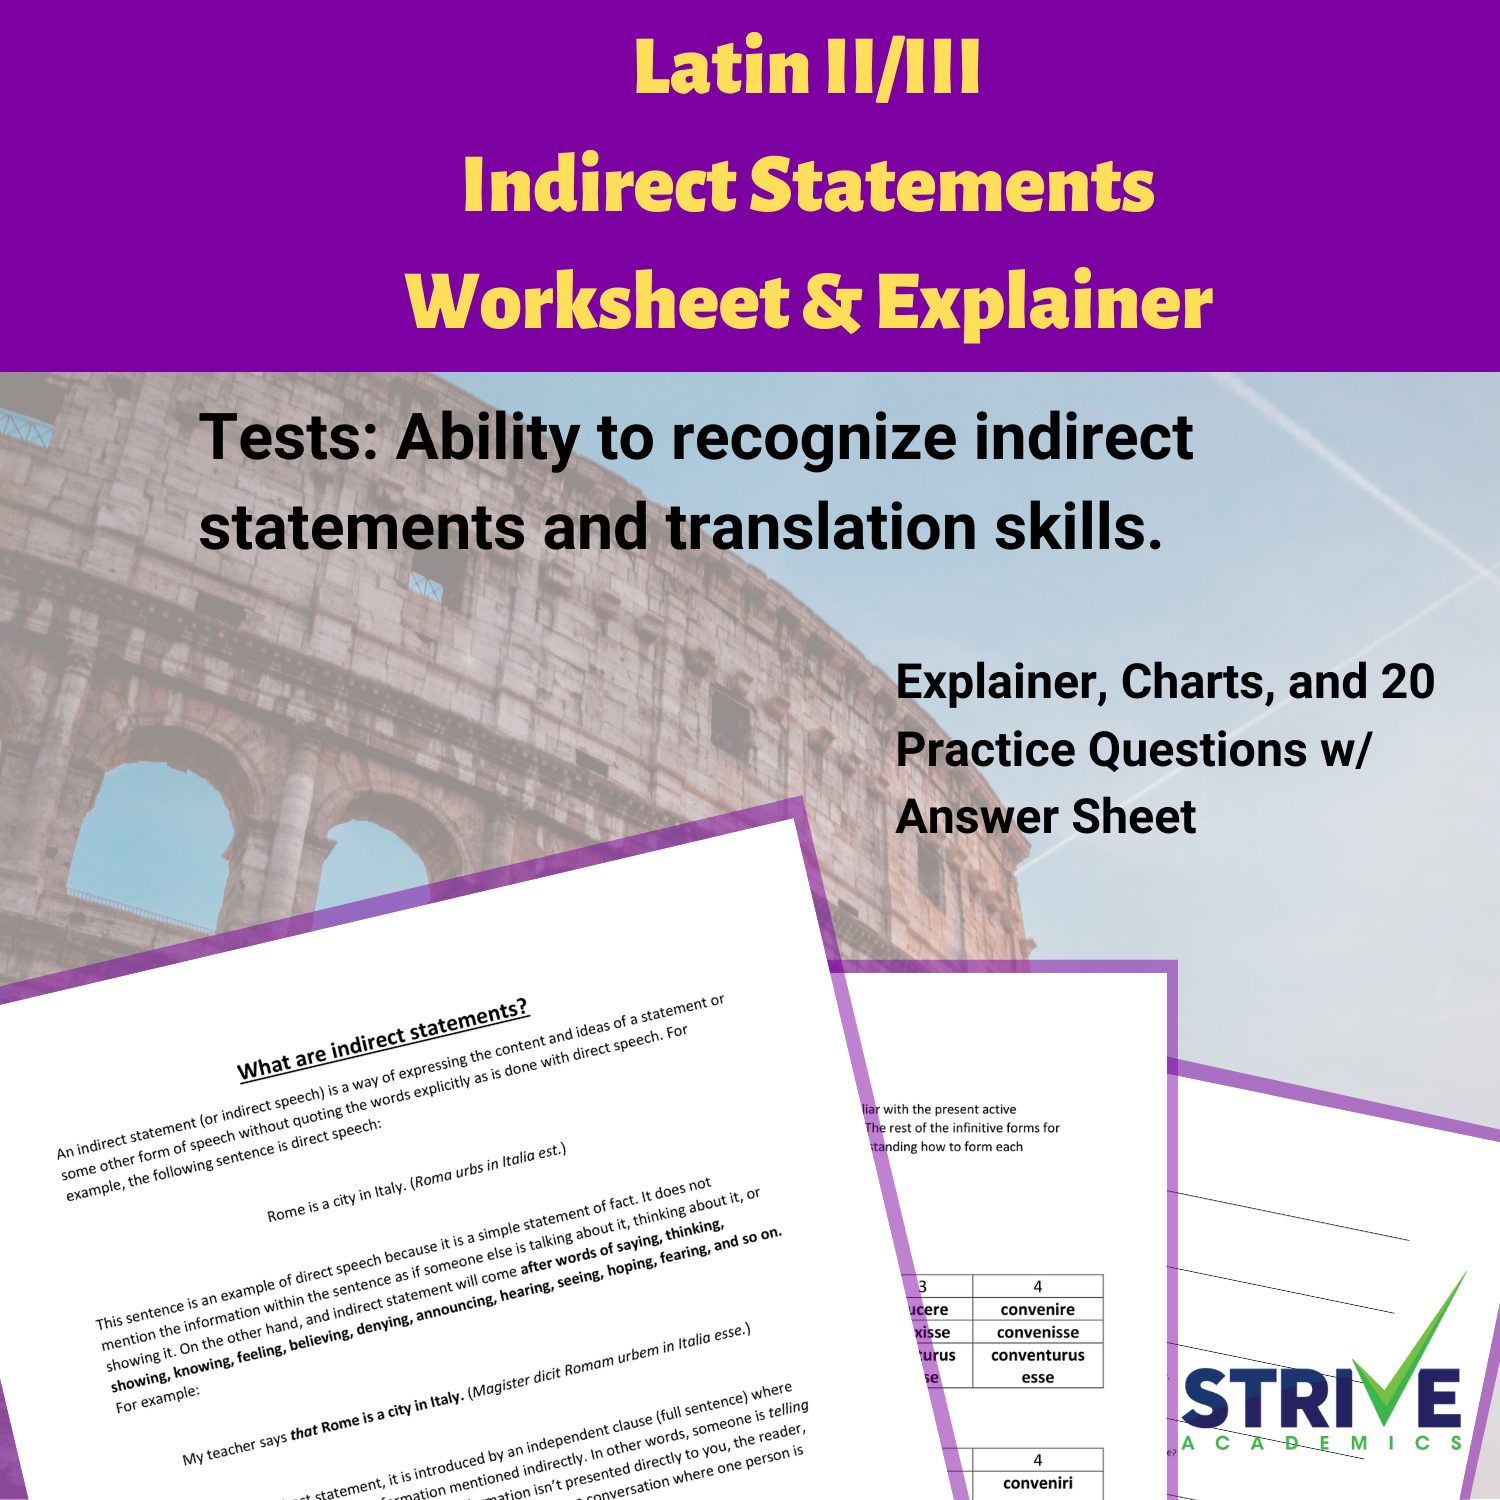 Latin II/III: Indirect Statements Worksheet and Explainer